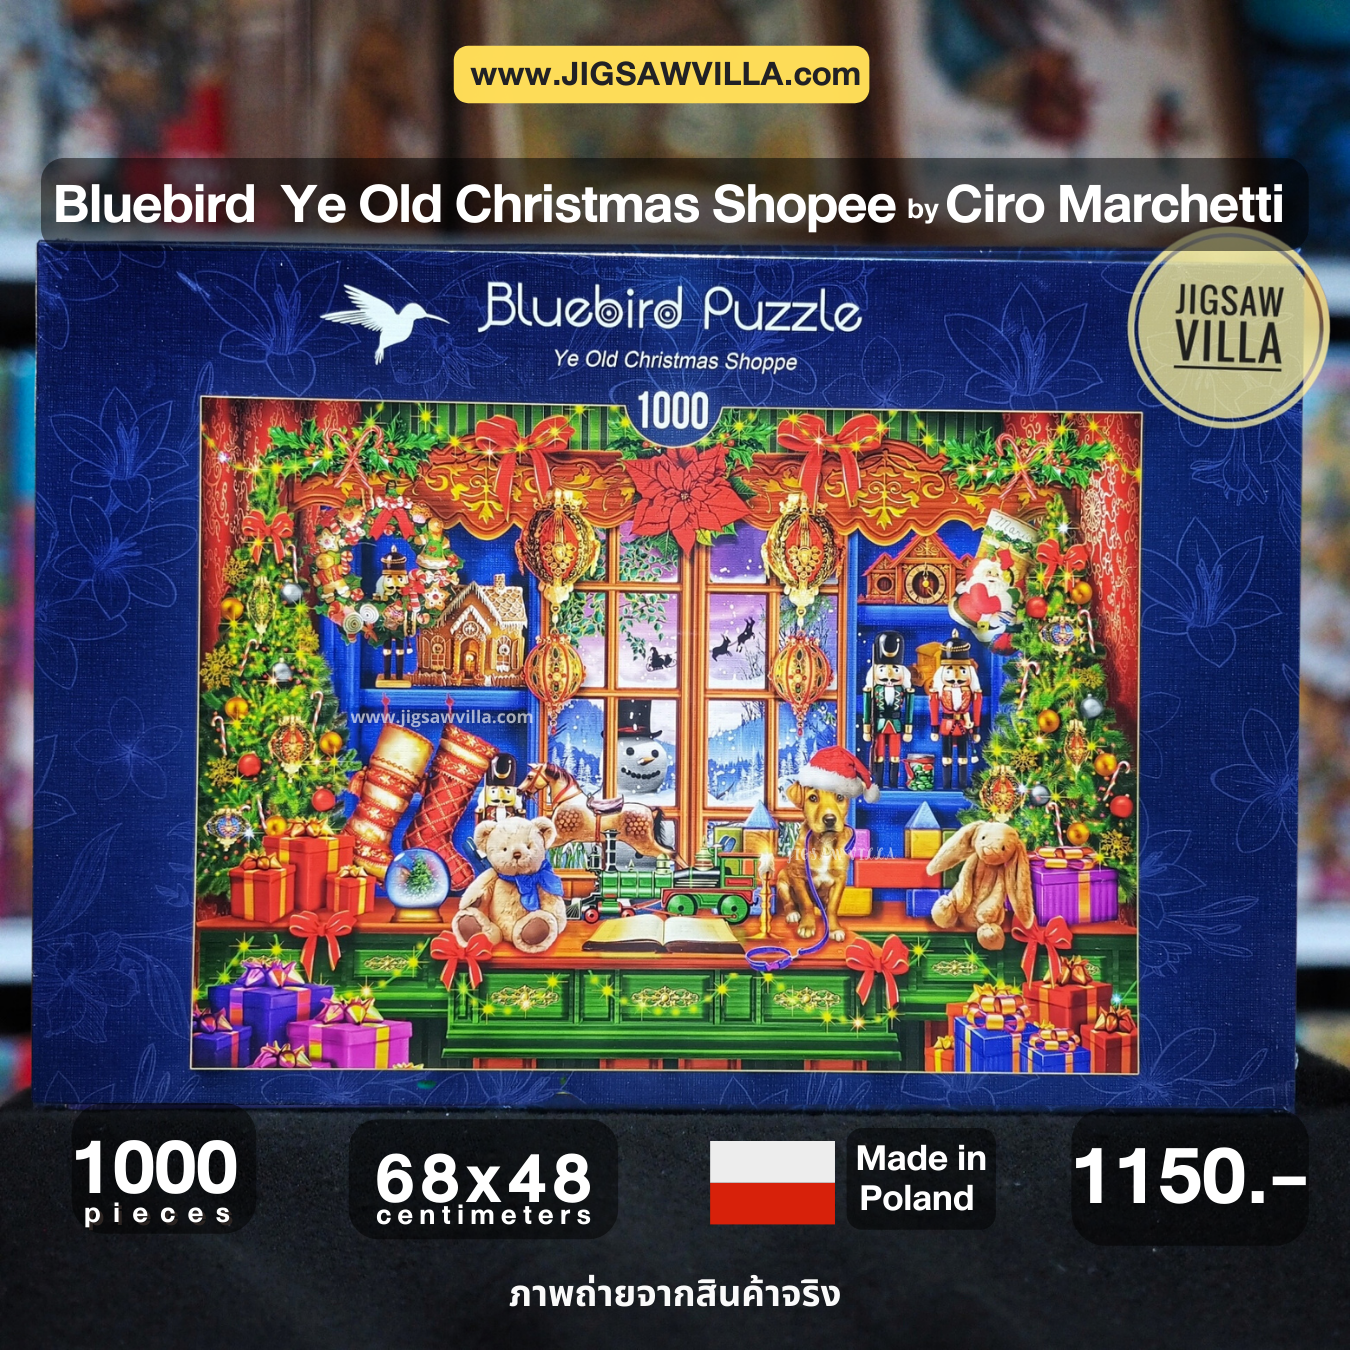 Bluebird Puzzle - Ye Old Christmas Shoppe by Ciro Marchetti 1000 pcs. -  Jigsaw Villa : Inspired by LnwShop.com